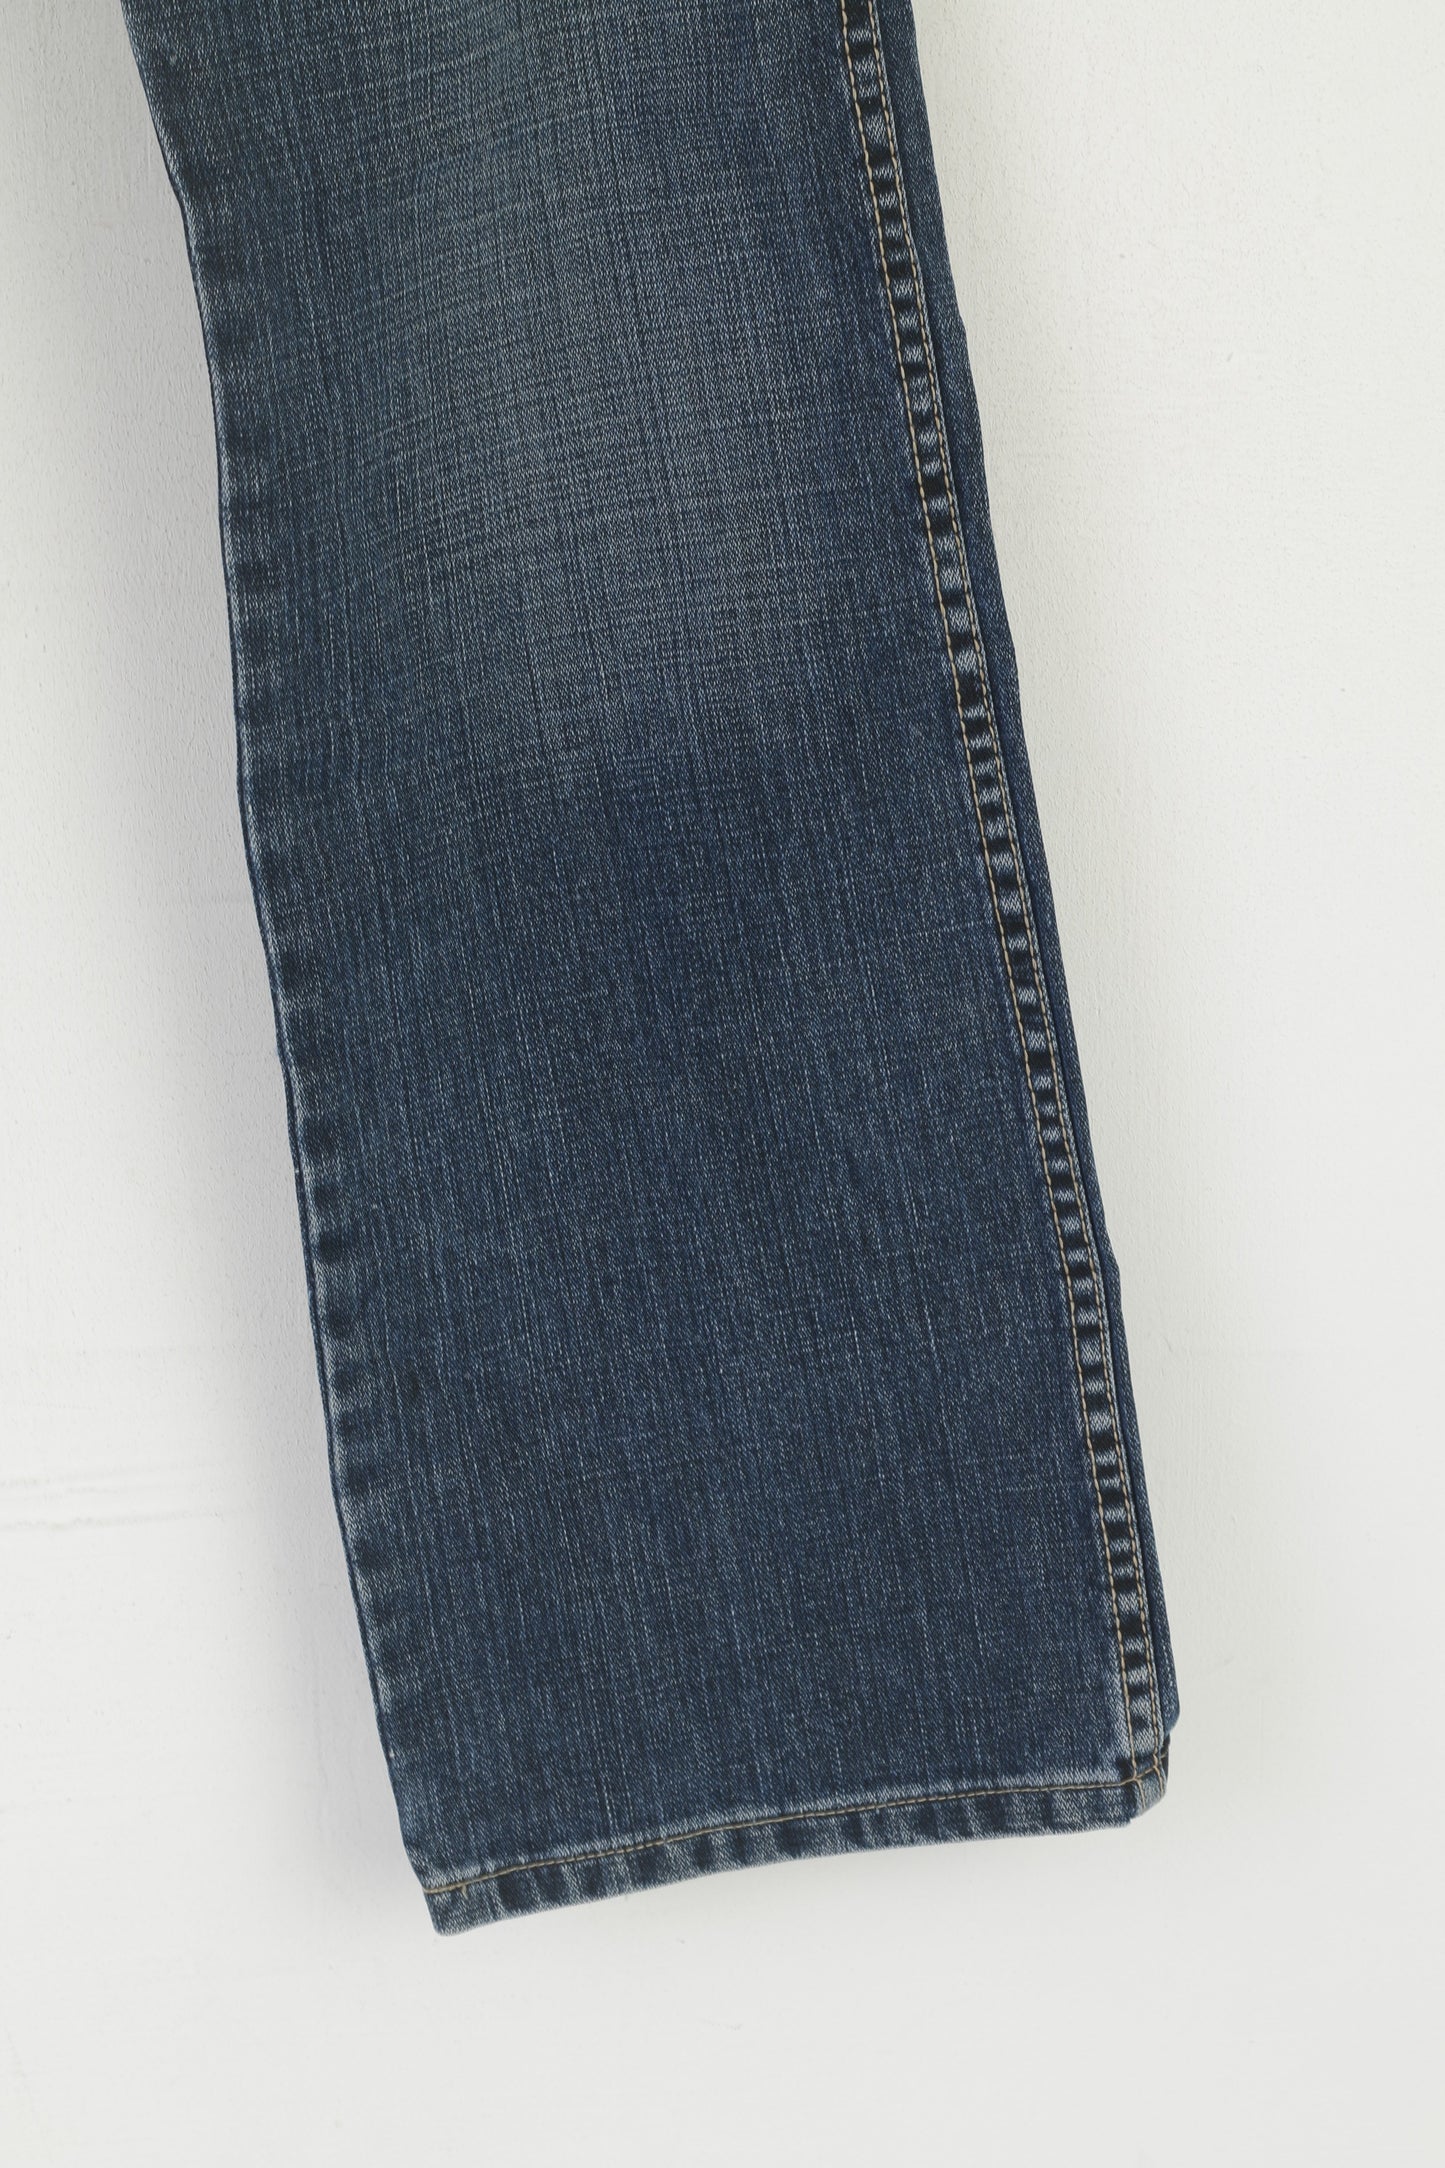 Pantaloni jeans Wrangler da donna 30 Pantaloni bootcut vintage in cotone denim blu scuro